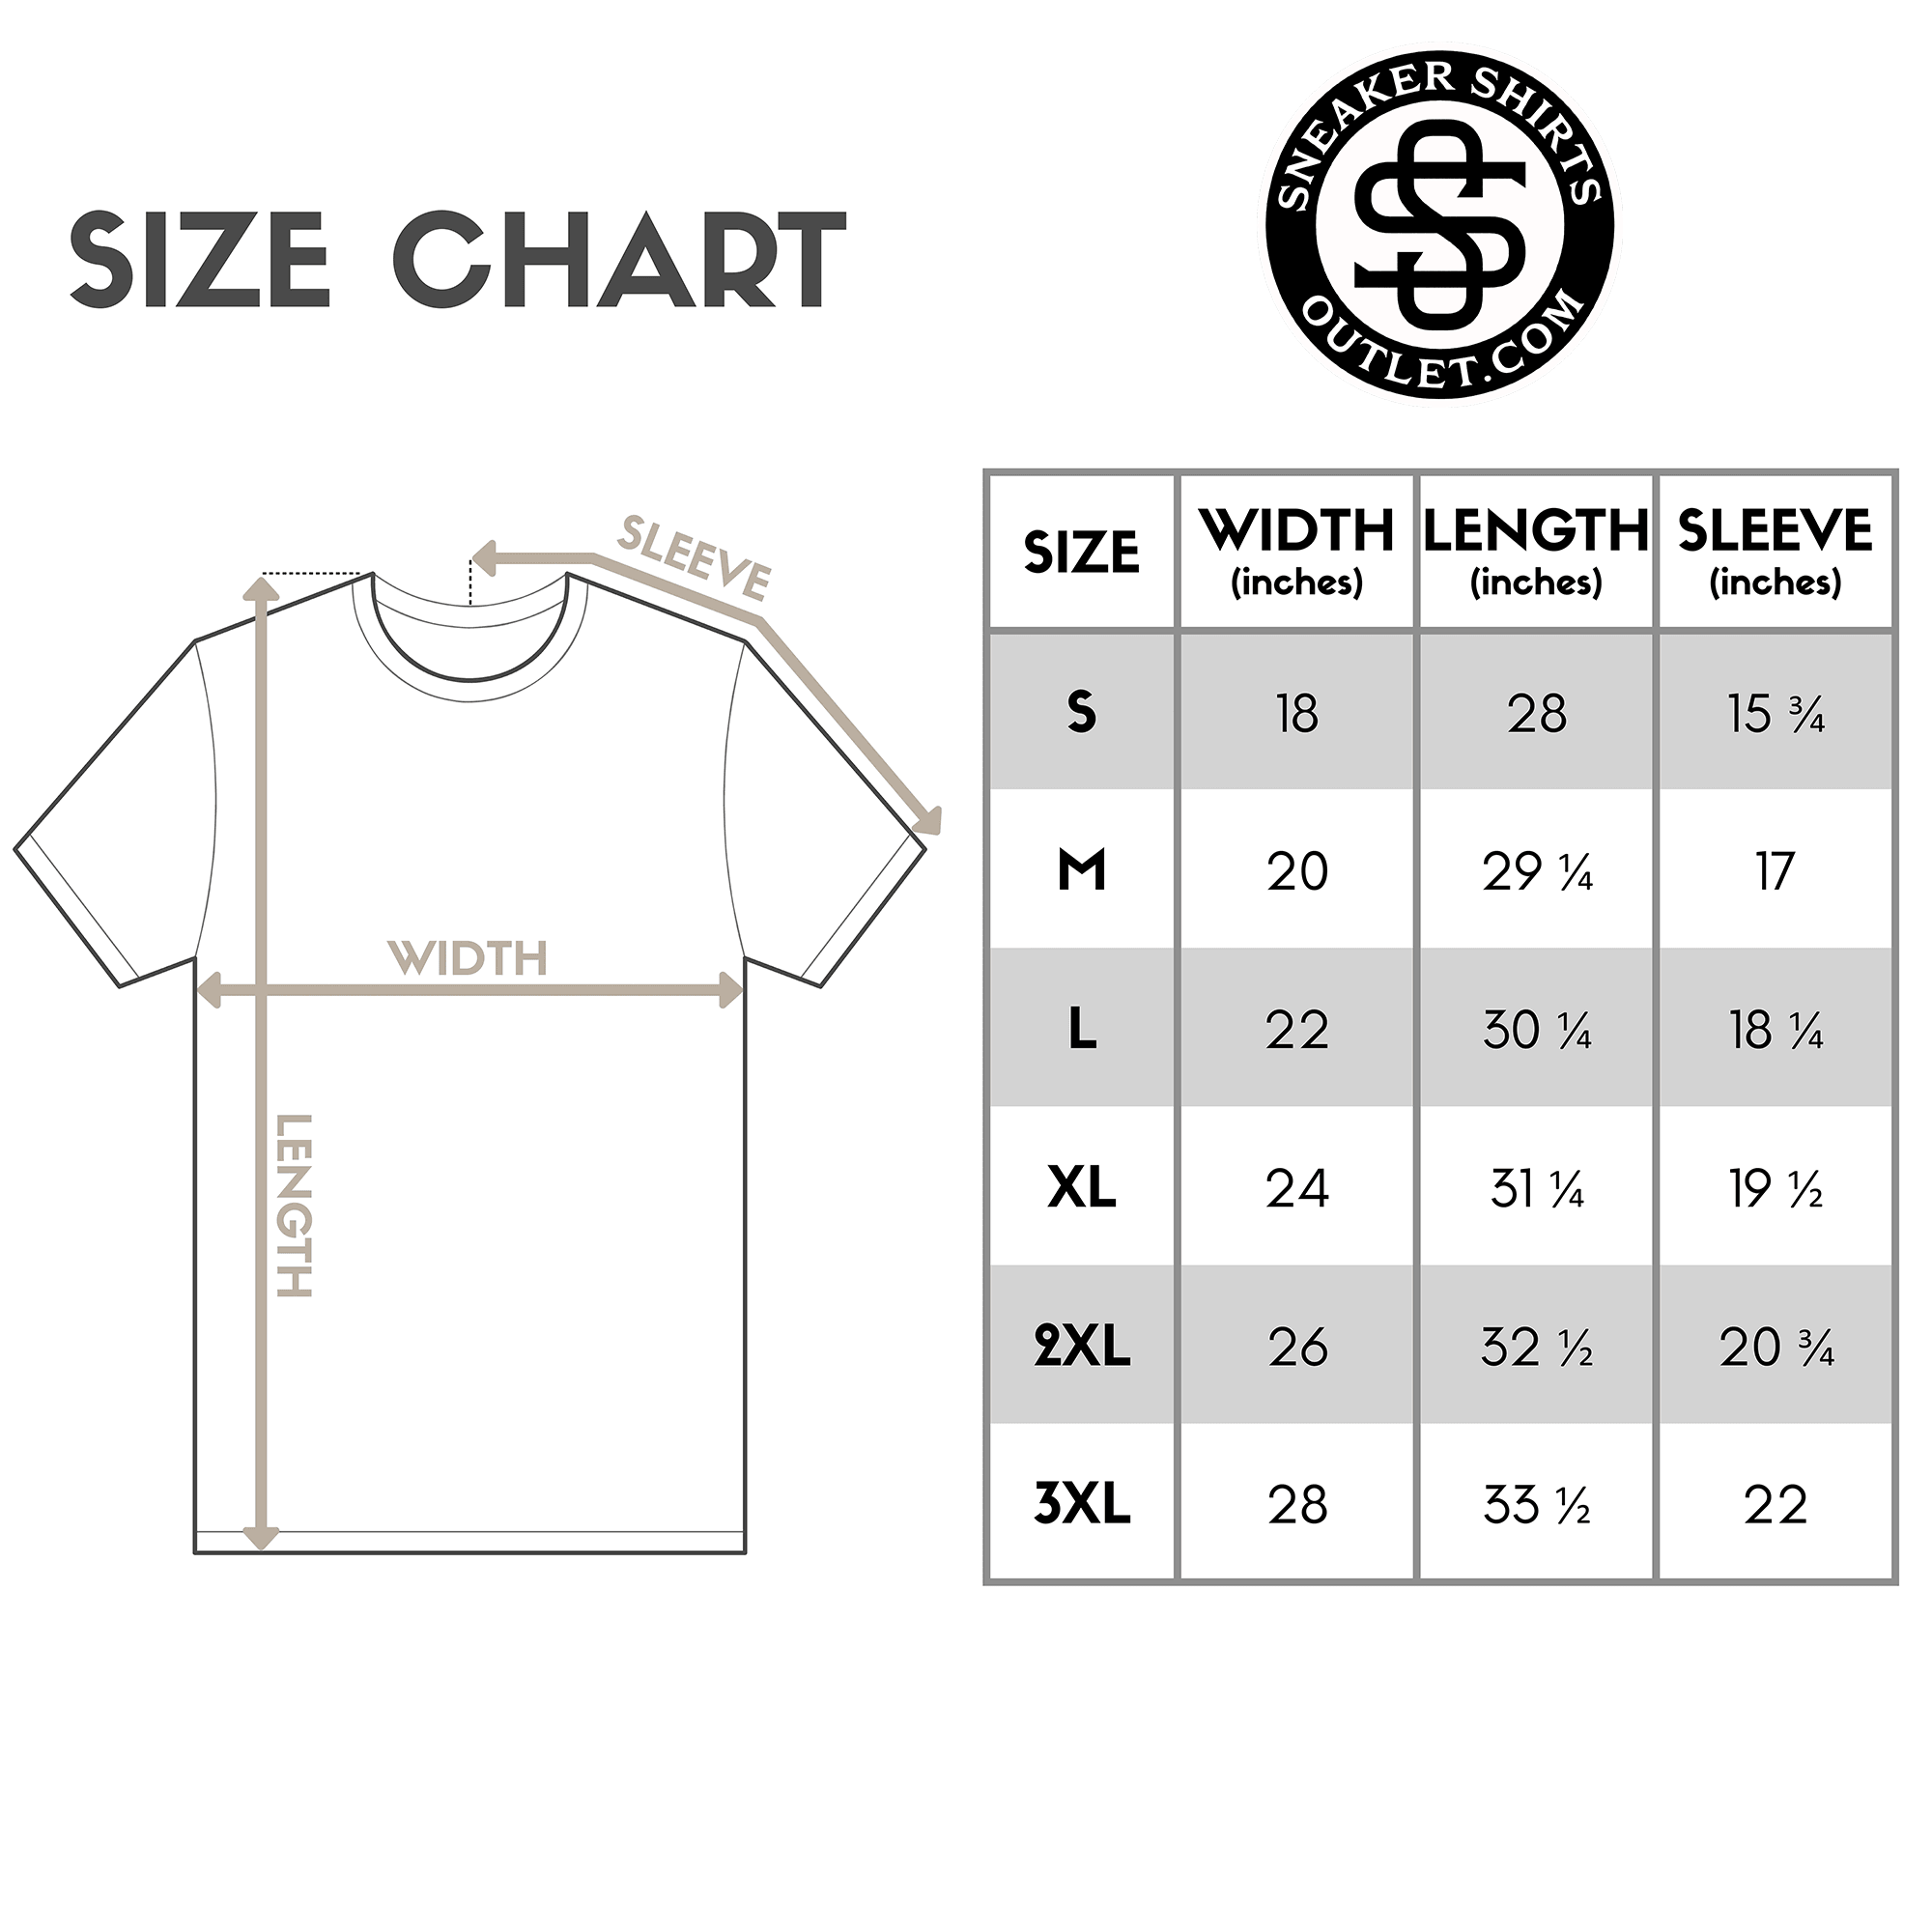 Move in Silence Shirt size chart photo